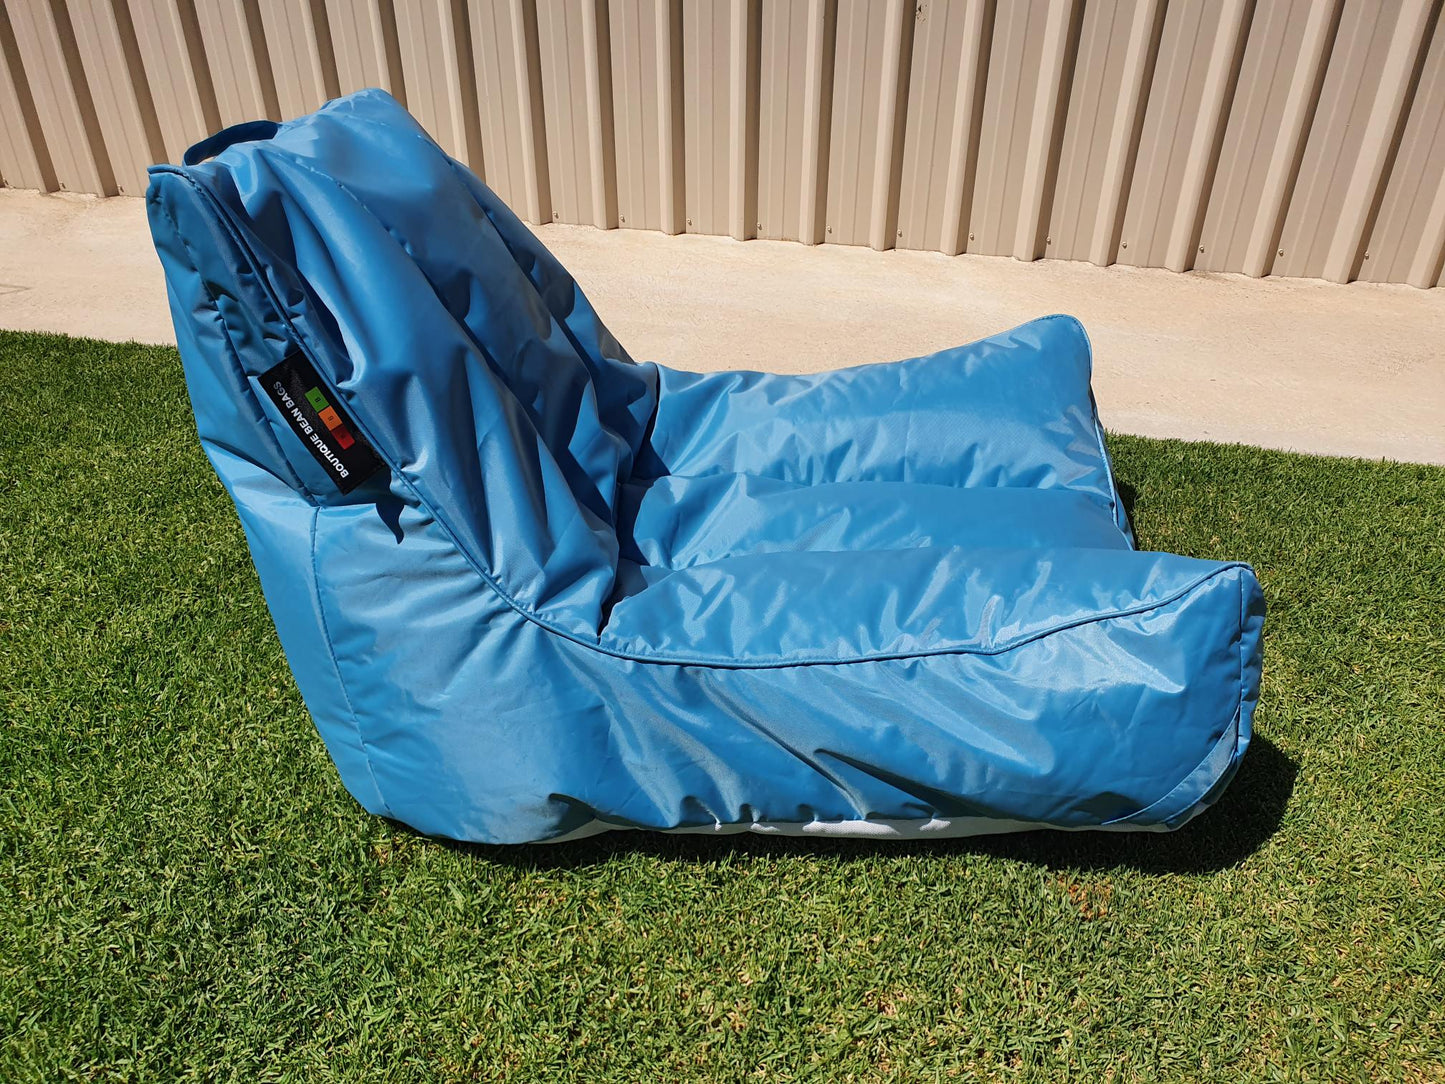 Water Chair floating pool bean bag - AQUA.